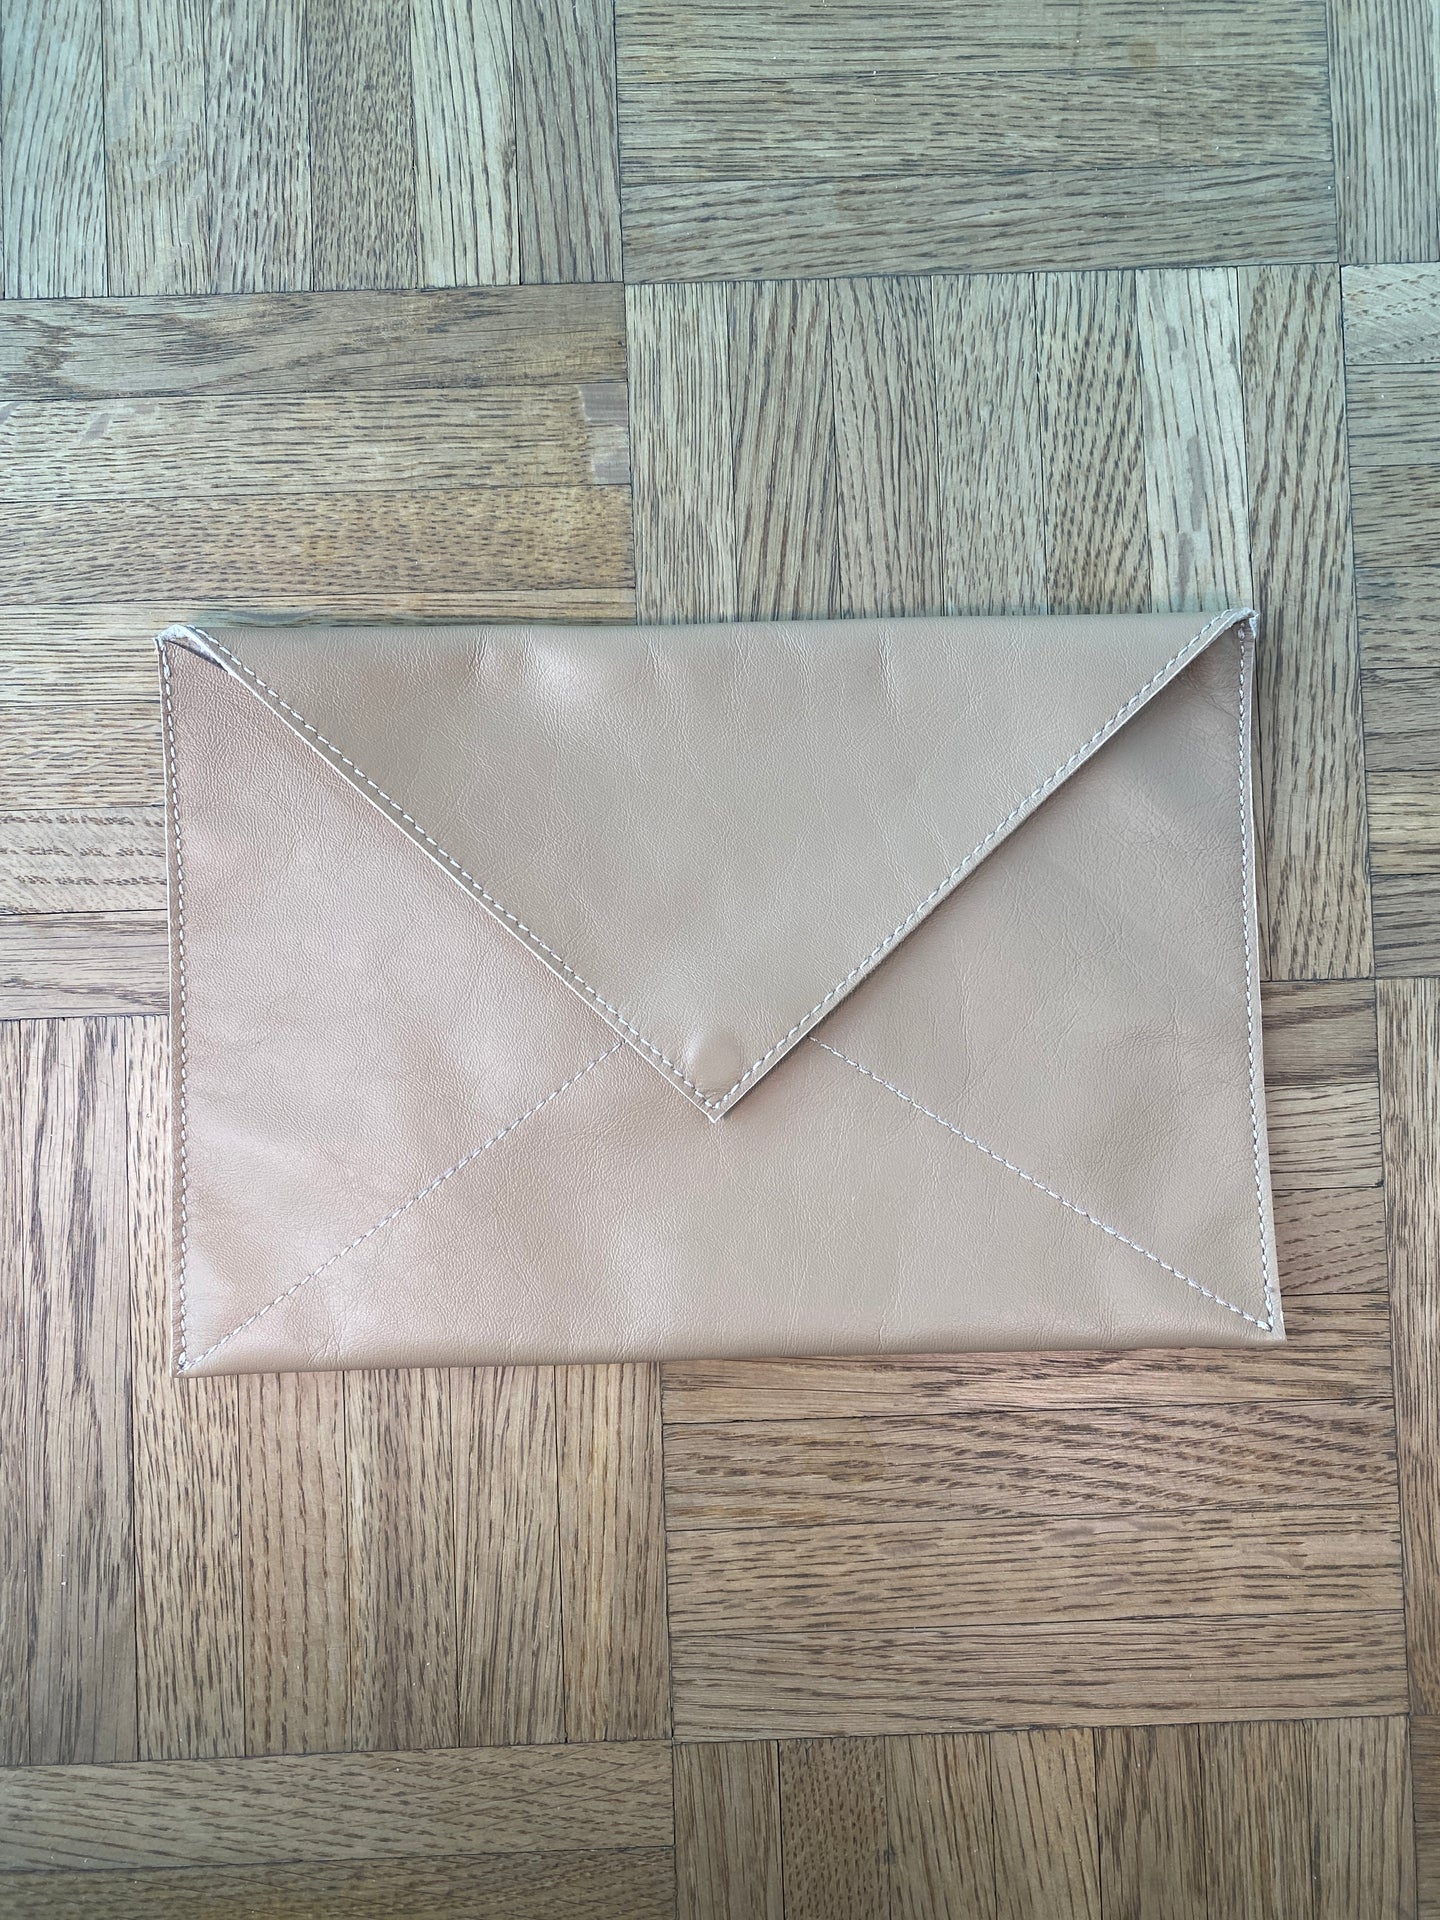 Leather Envelope C5